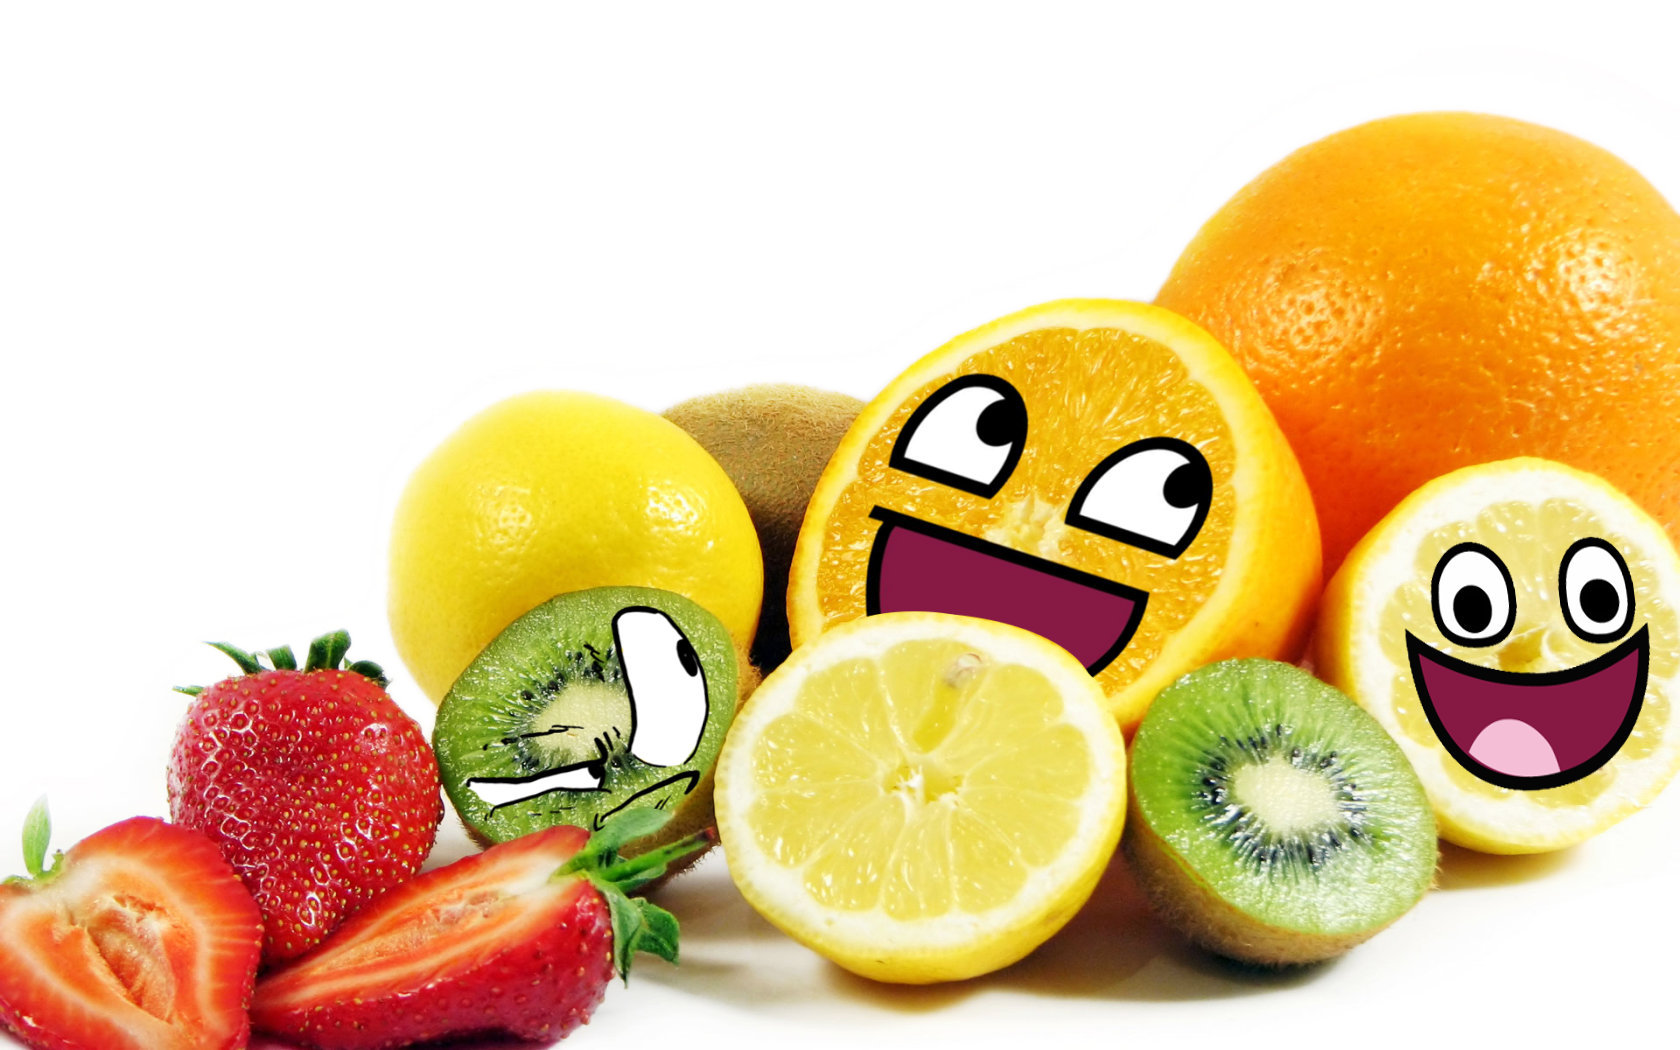 New Lock Screen Wallpapers humor, smiley, fruit, orange (color)